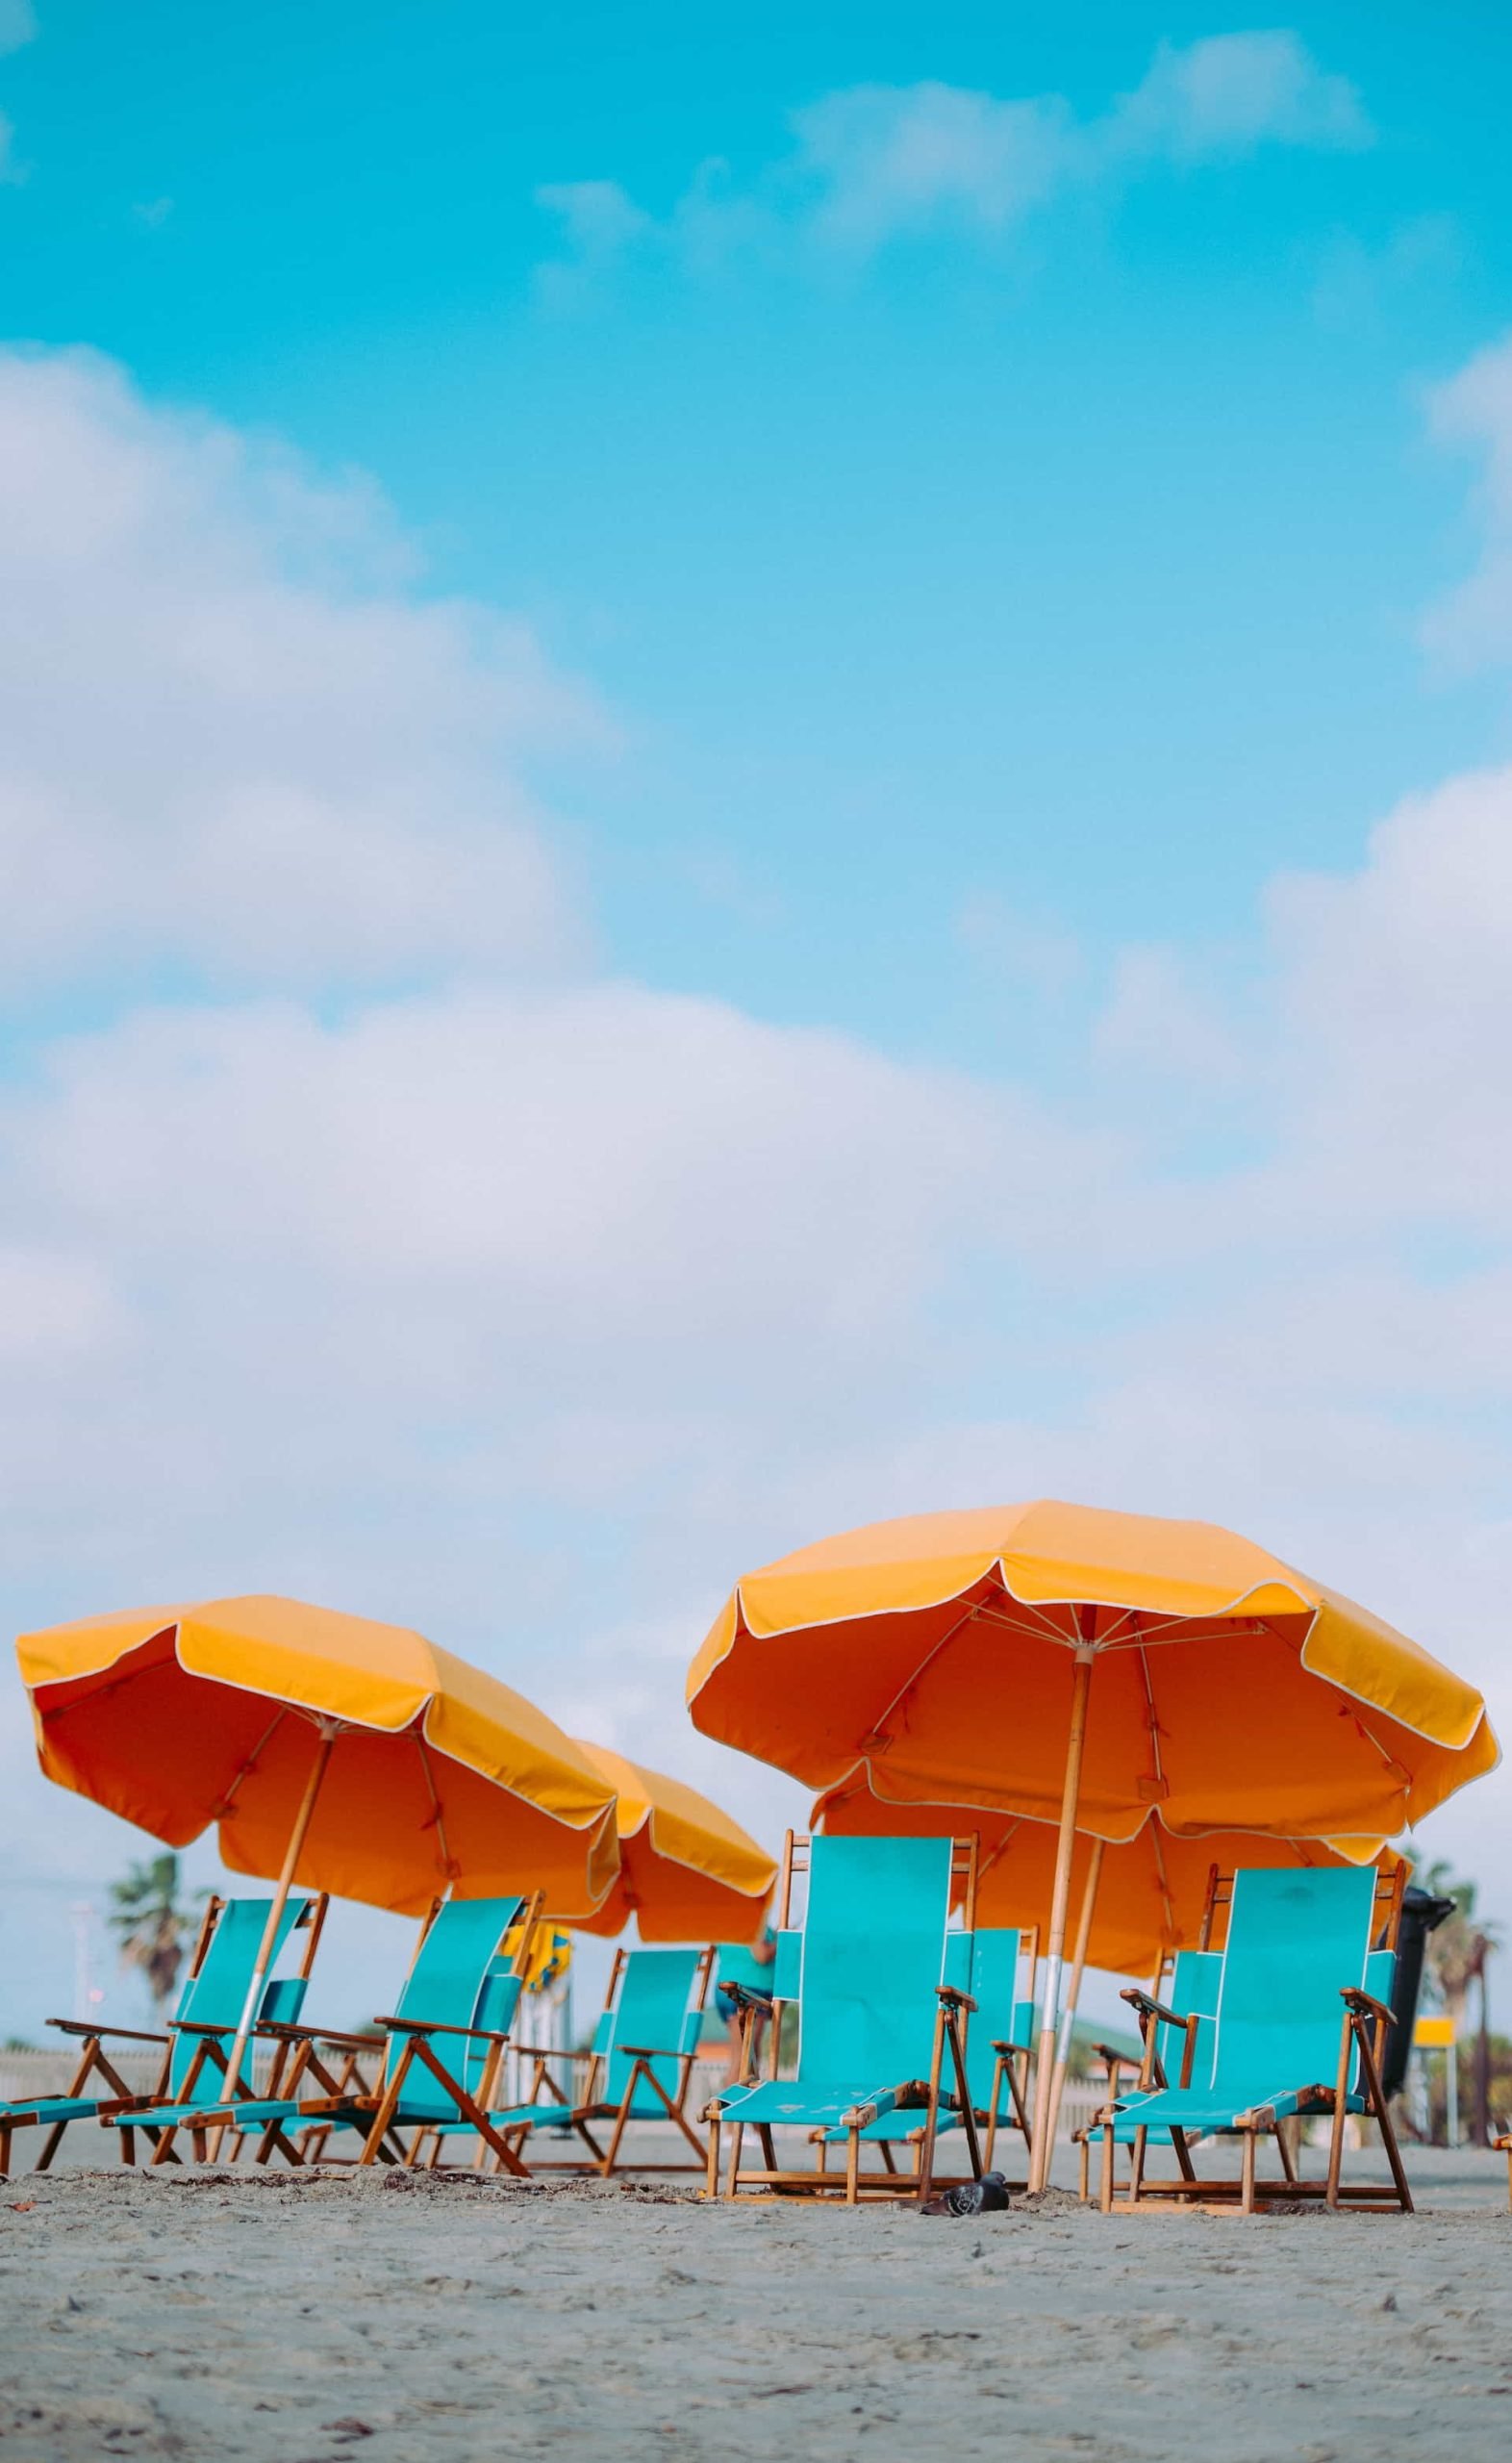 Beach Chairs and Umbrellas